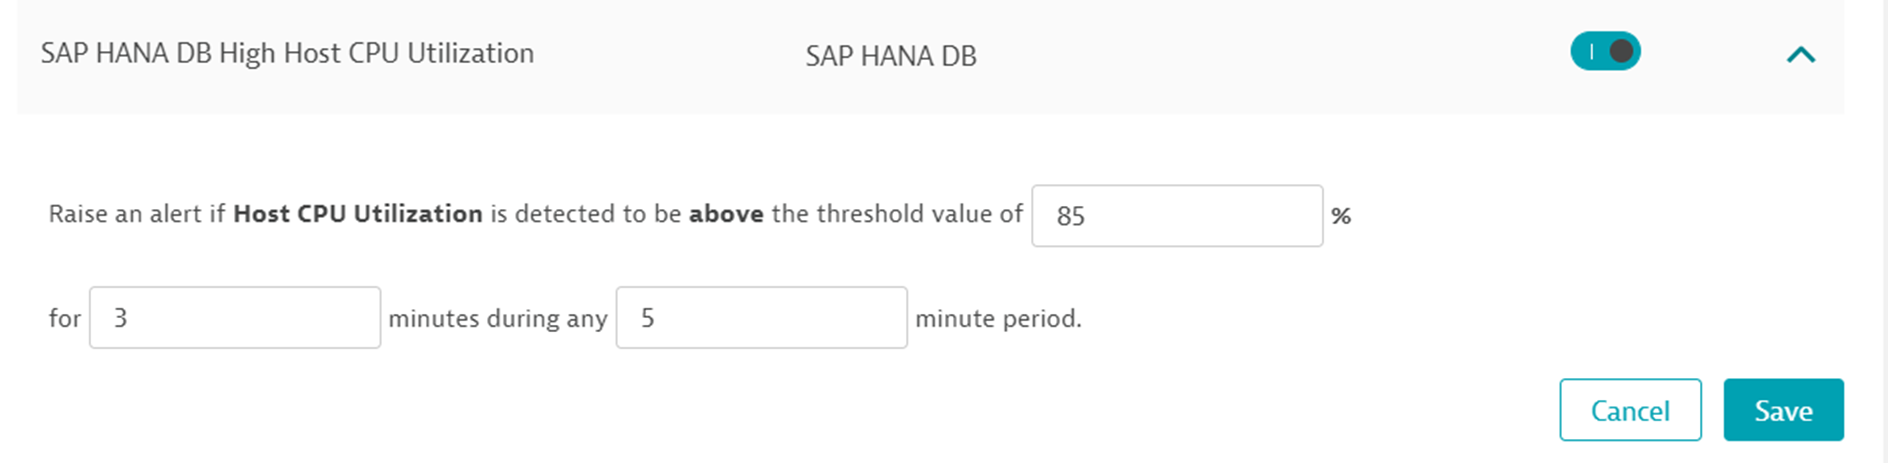 Dynatrace SAP HANA DB Built In CPU Event